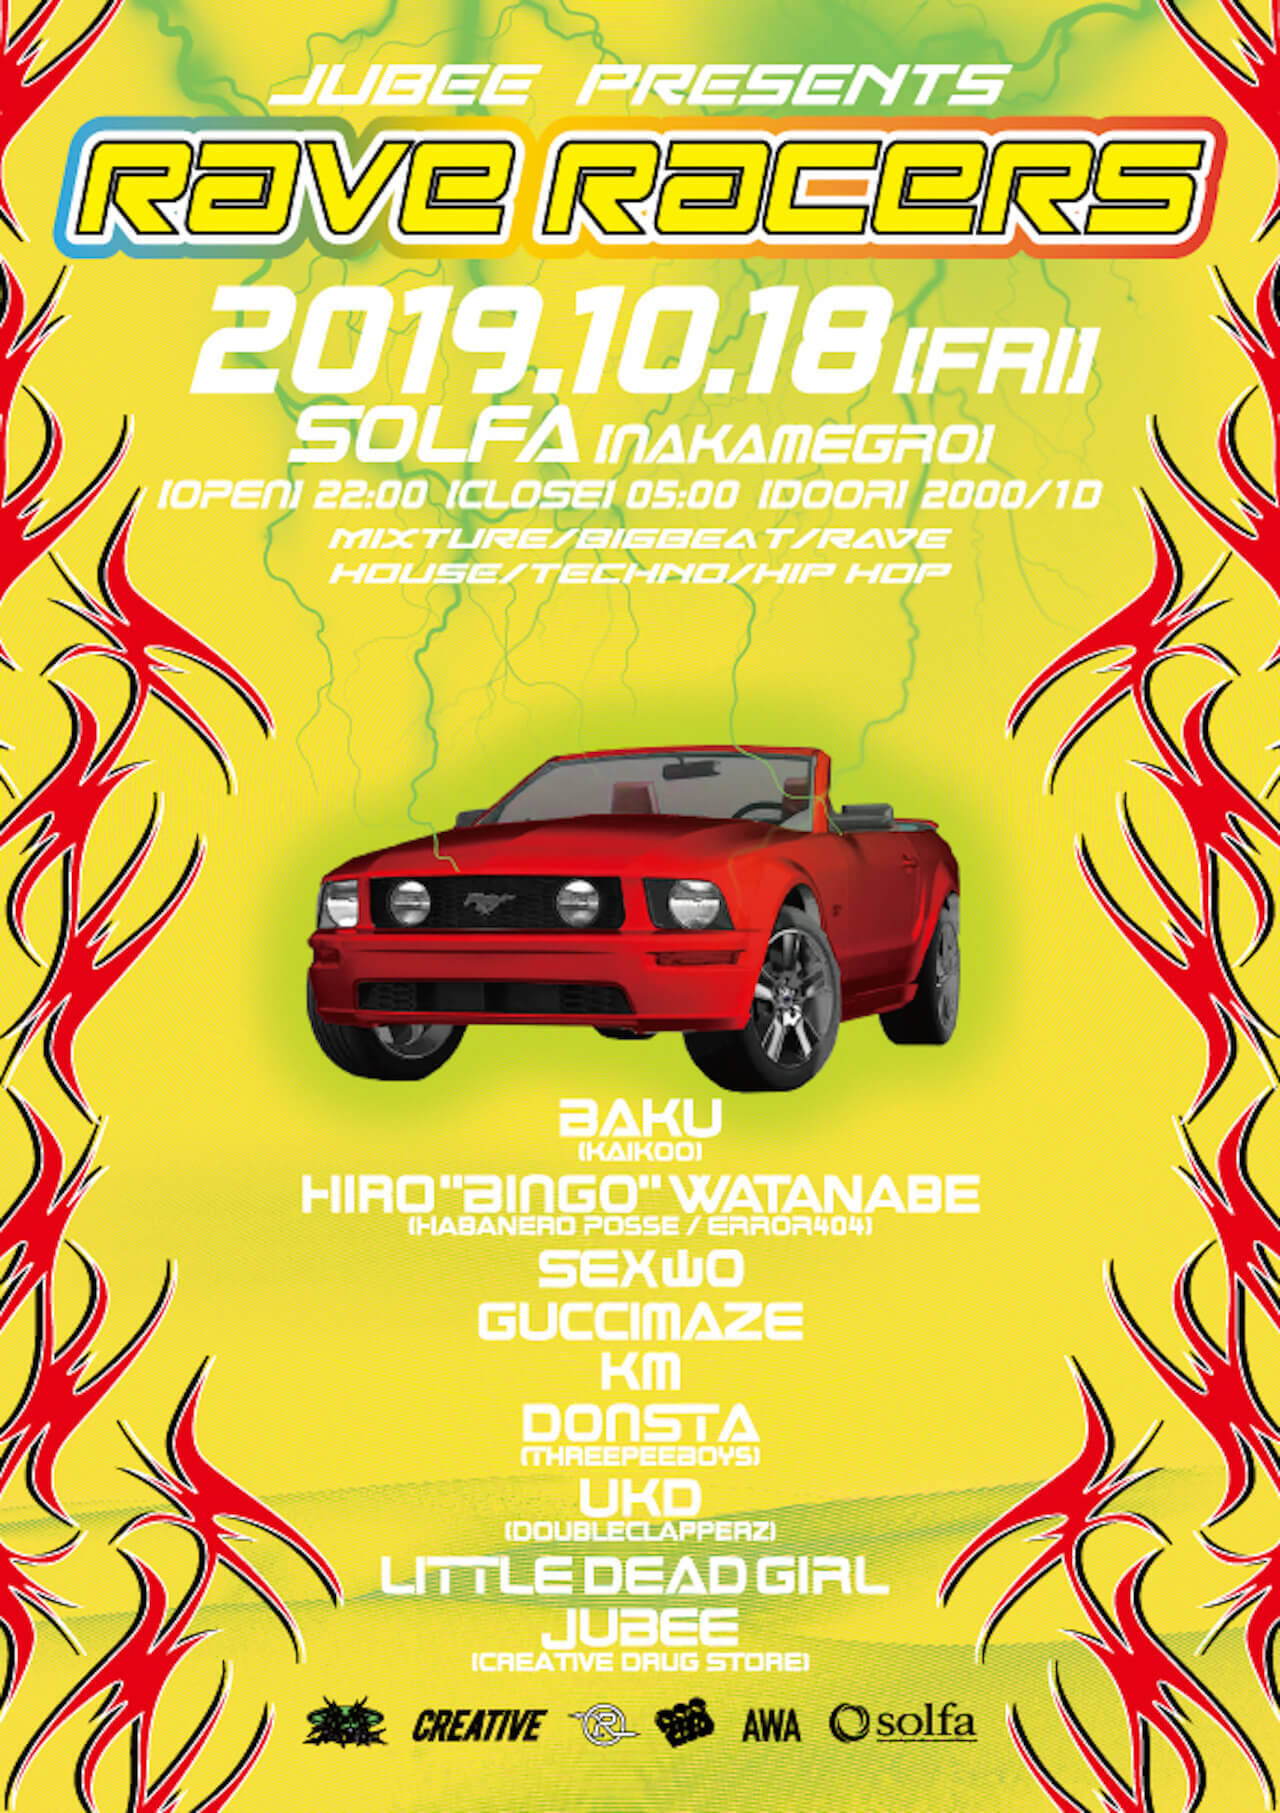 JUBEEの主催イベント＜Rave Racers＞が10月に中目黒solfaにて開催｜BAKU、Hiro “BINGO” Watanabe 、SEX山口、KM、GUCCIMAZEらが登場